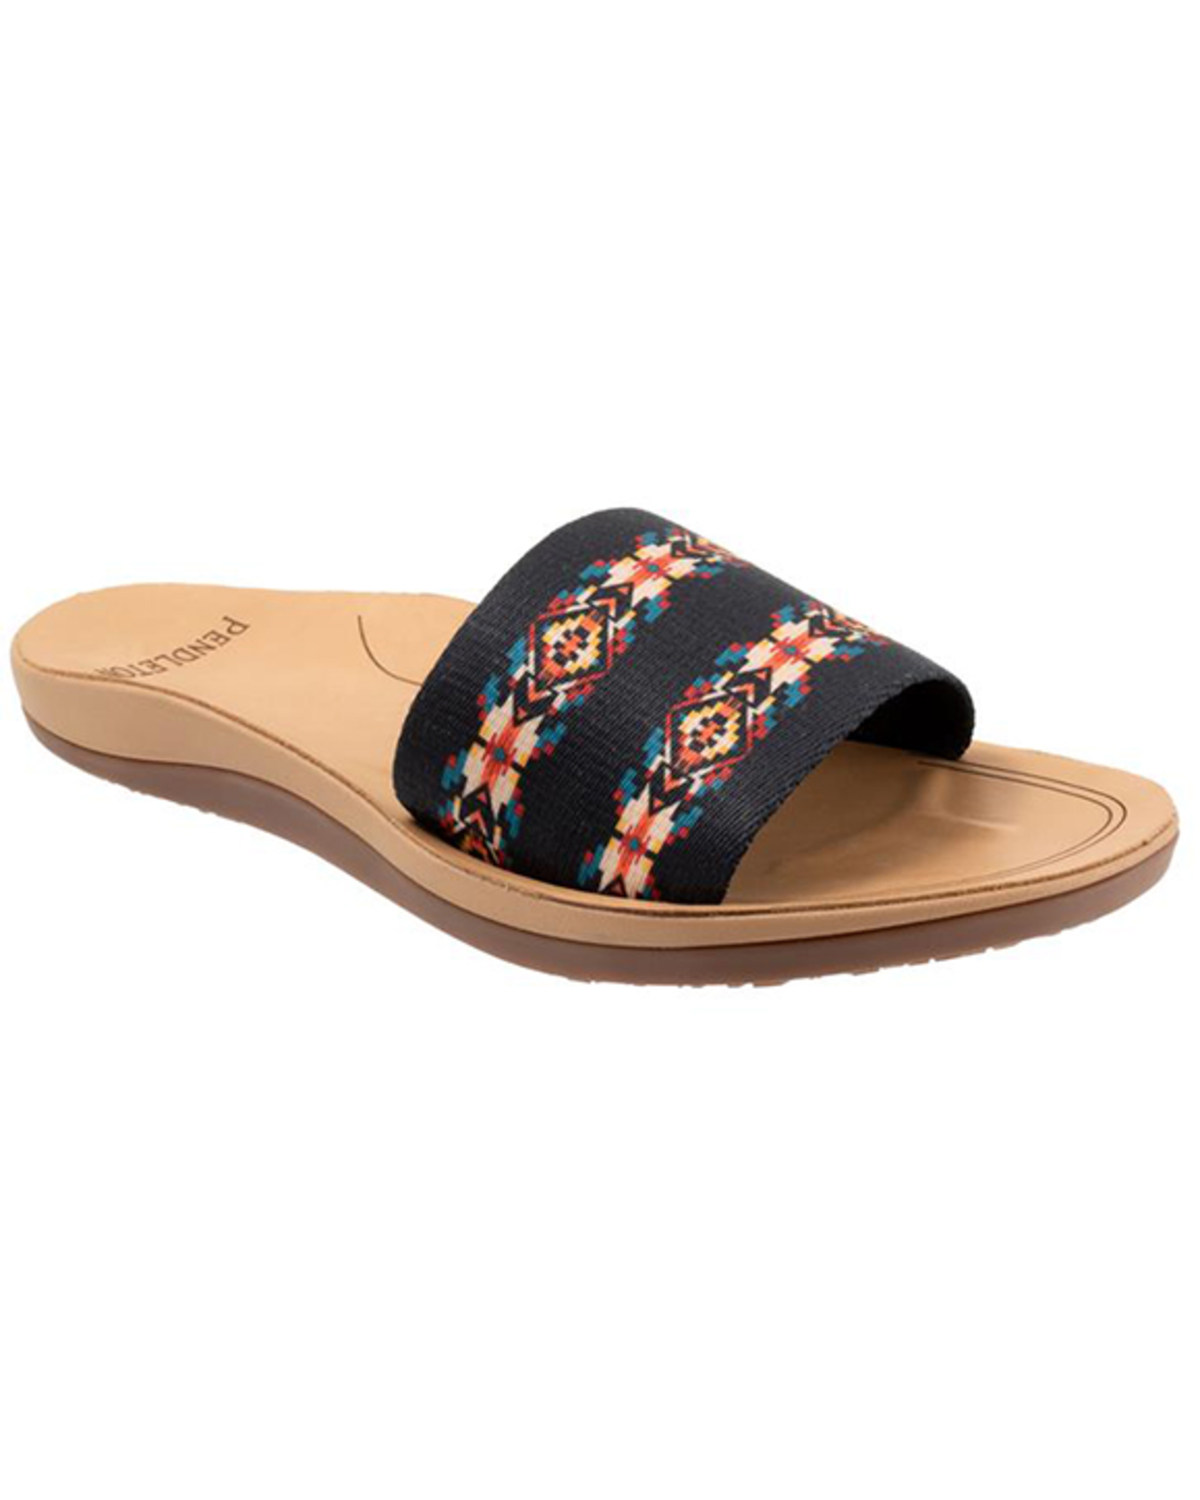 Pendleton Women's Carico Lake Slide Sandals